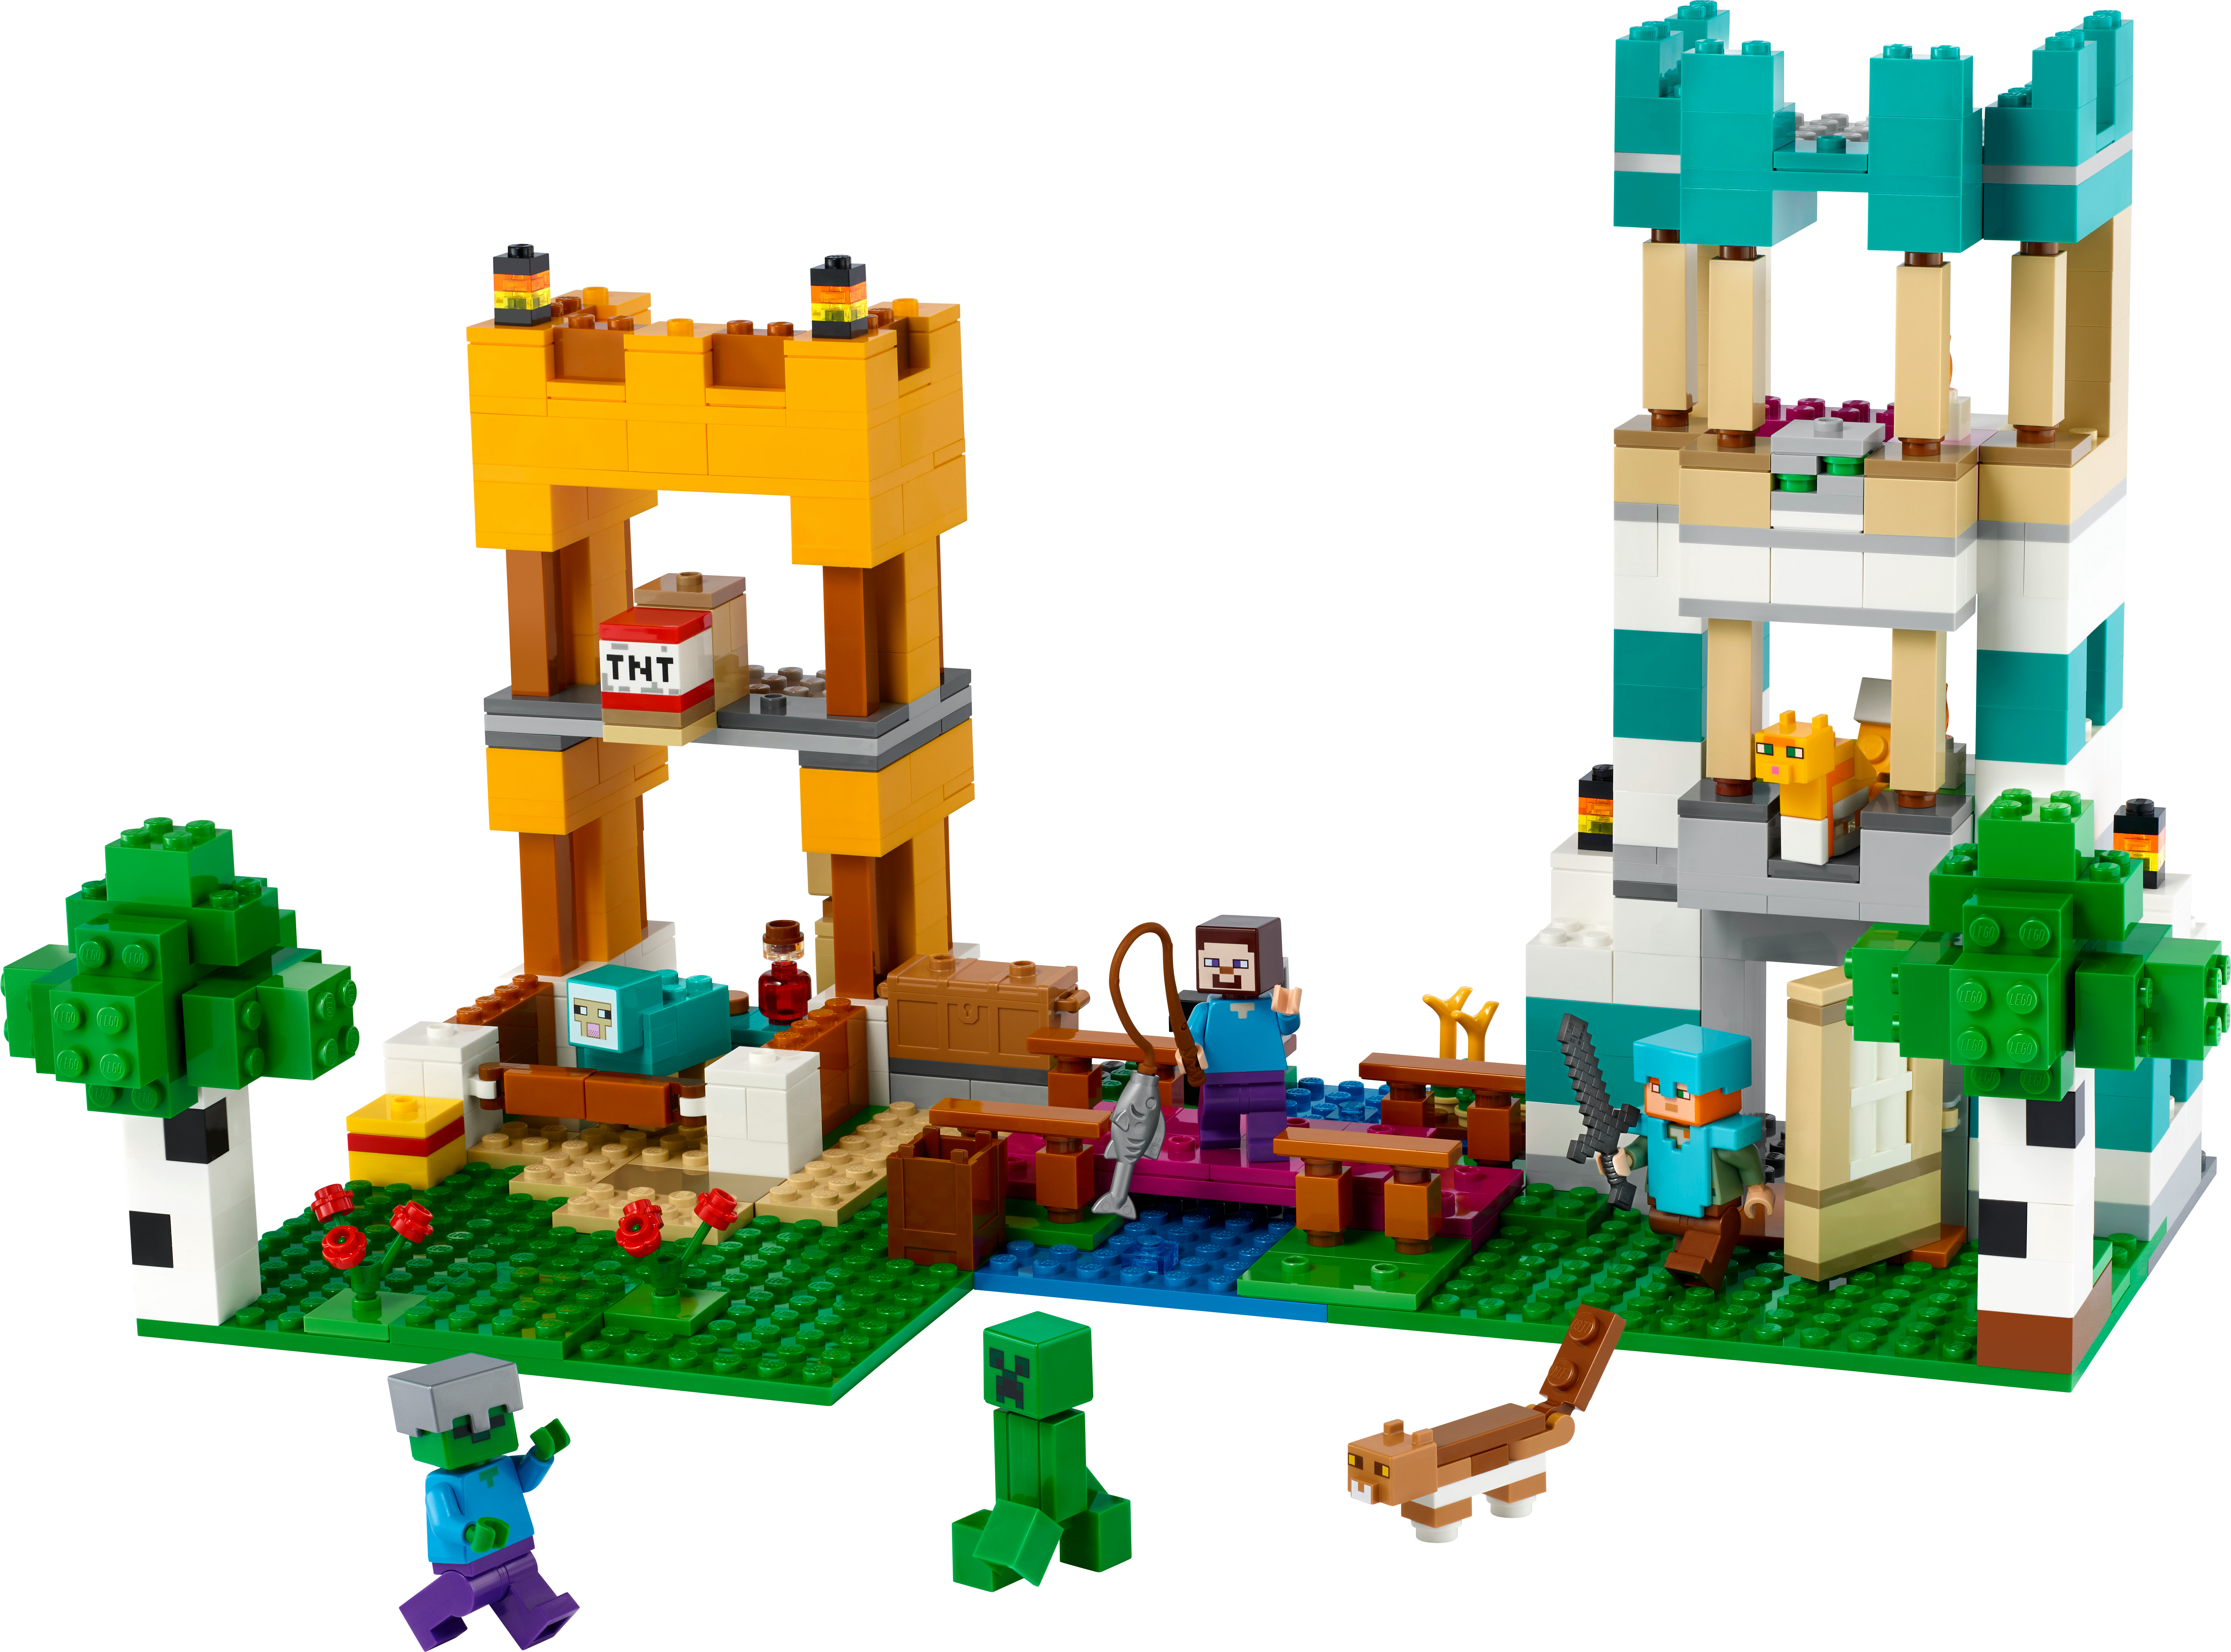 LEGO Minecraft 21249 Die Crafting Box 4.0